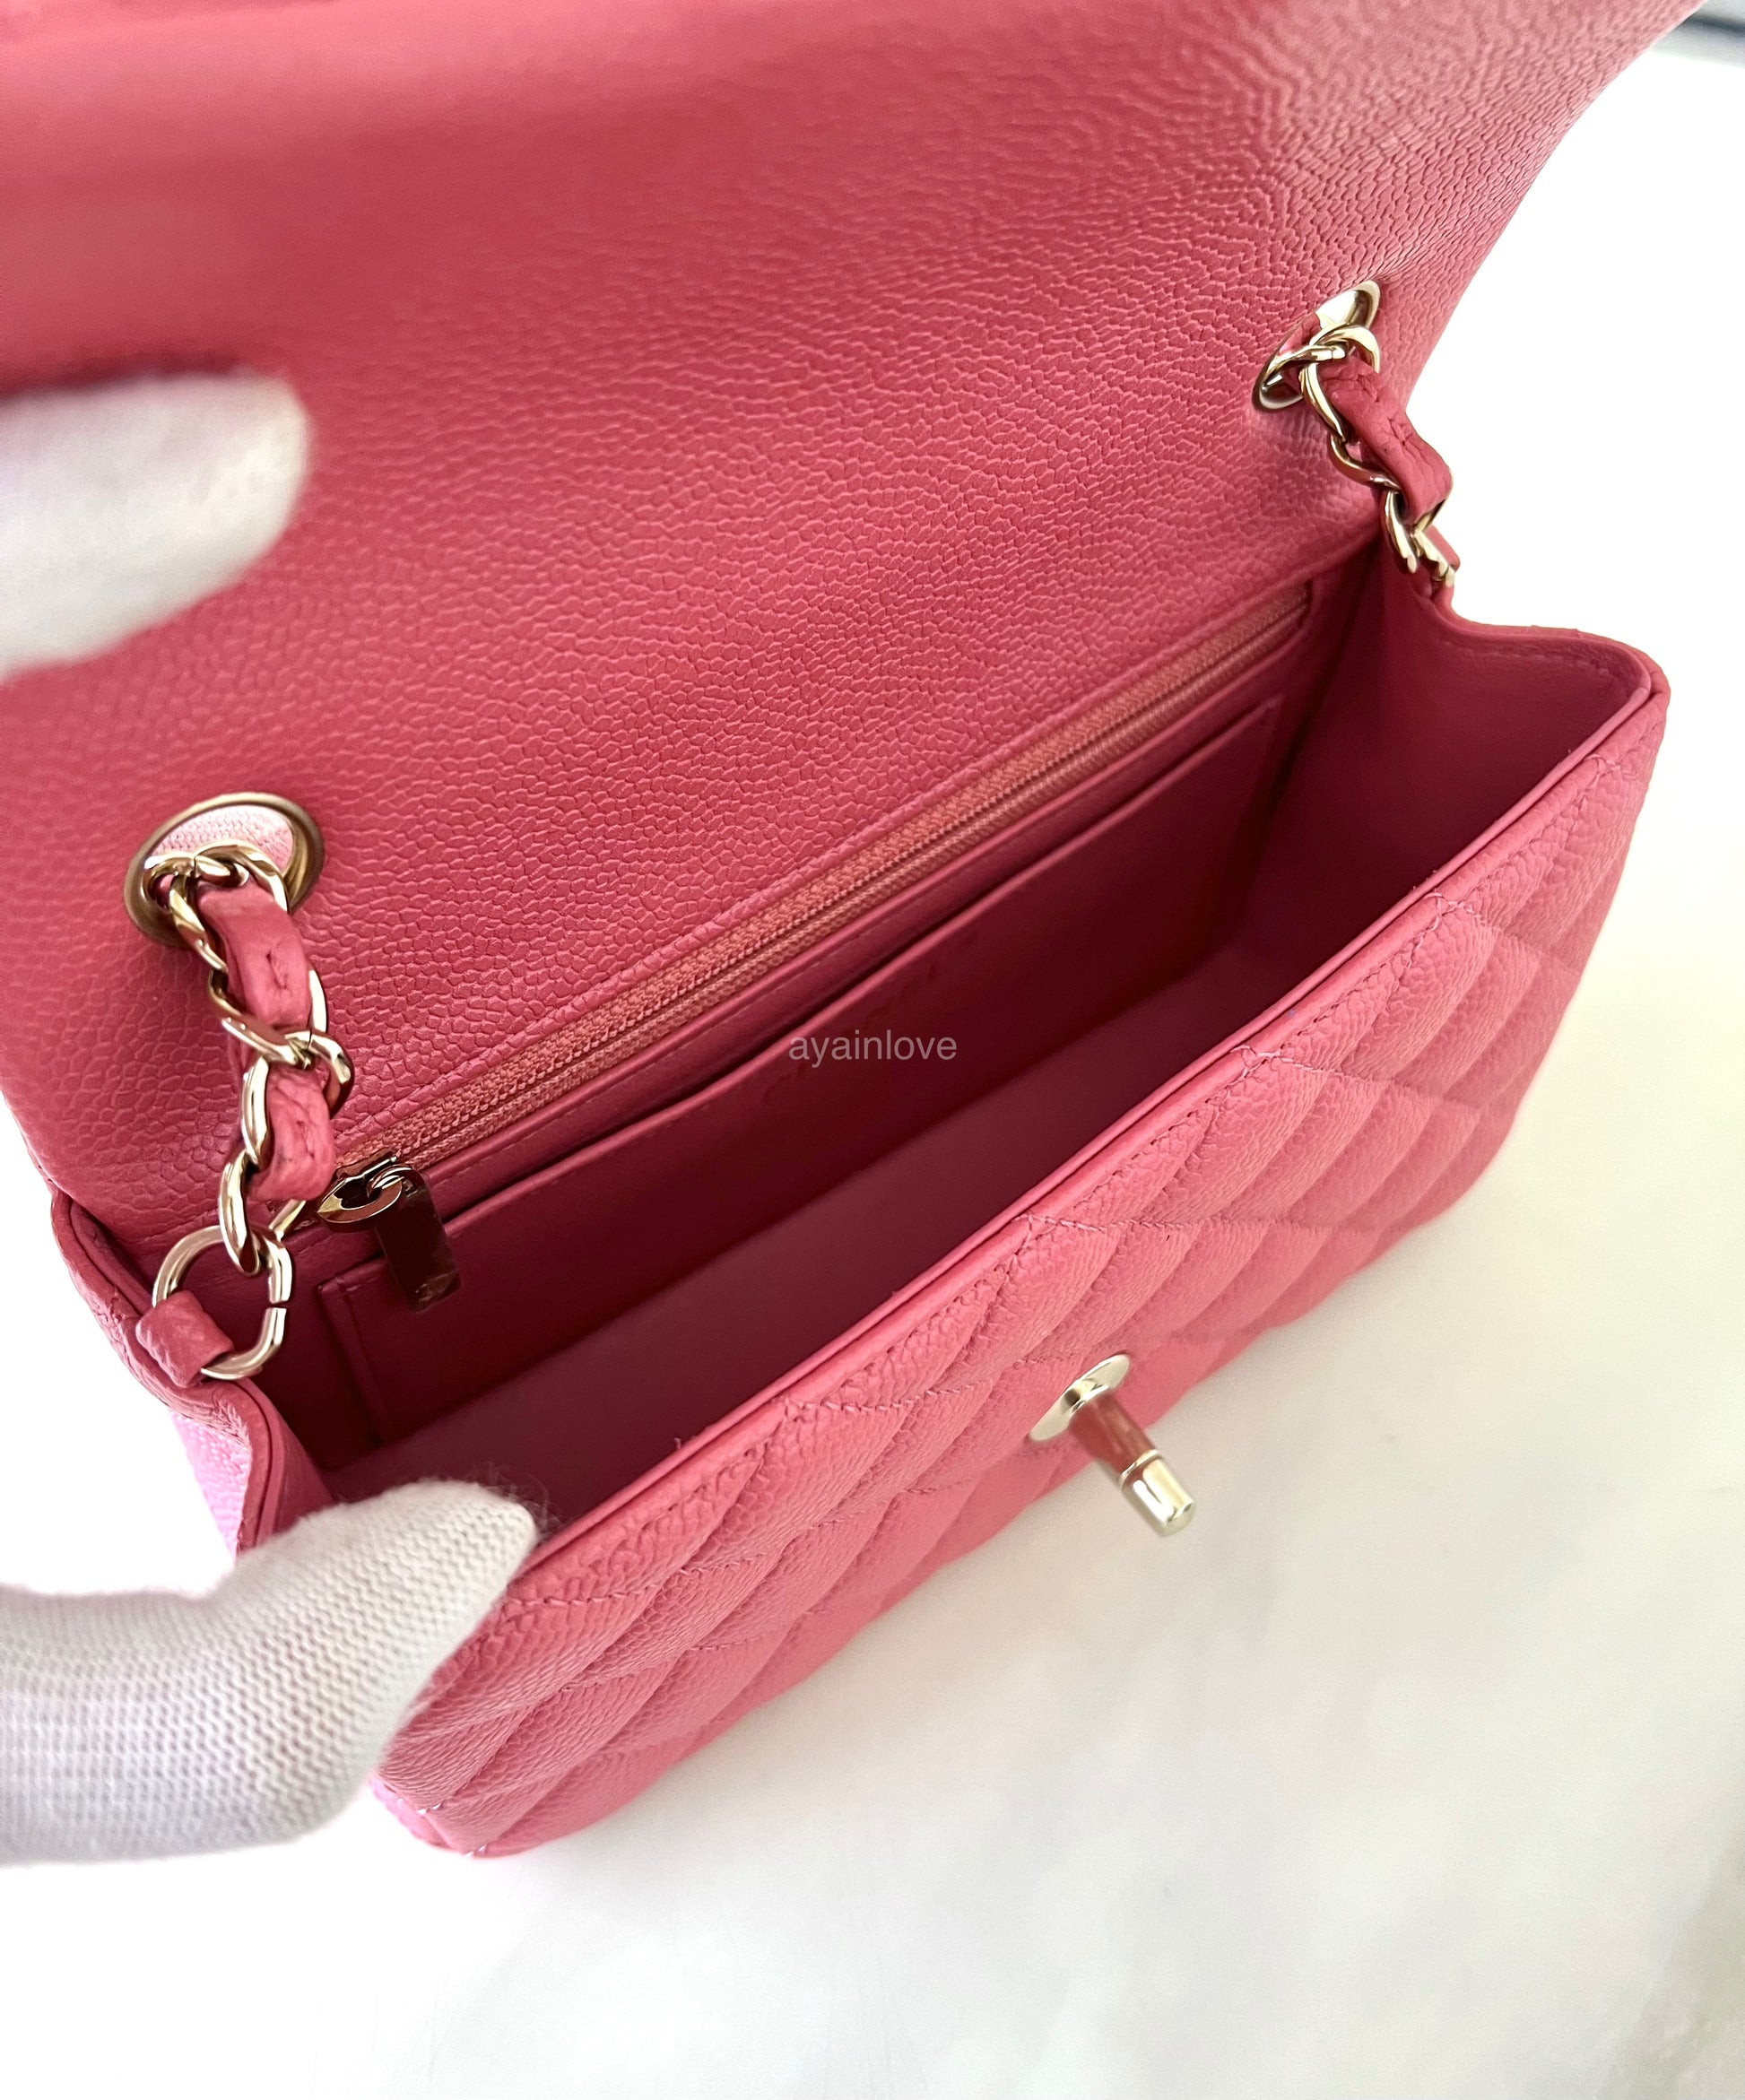 CHANEL 18S Pearly Pink Caviar Rectangular Mini Flap Bag Light Gold